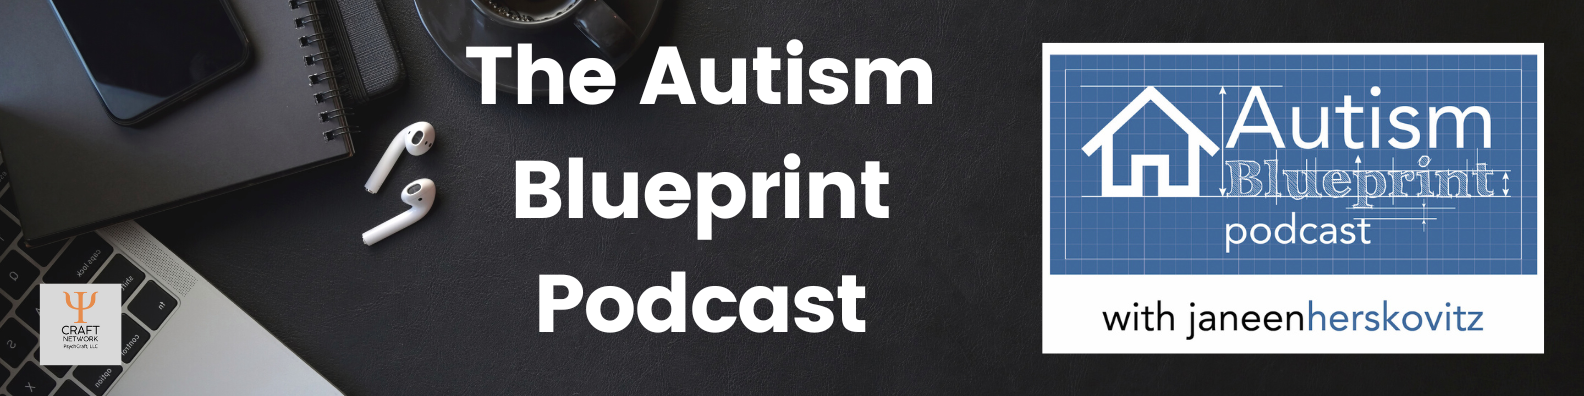 About The Autism Blueprint Podcast